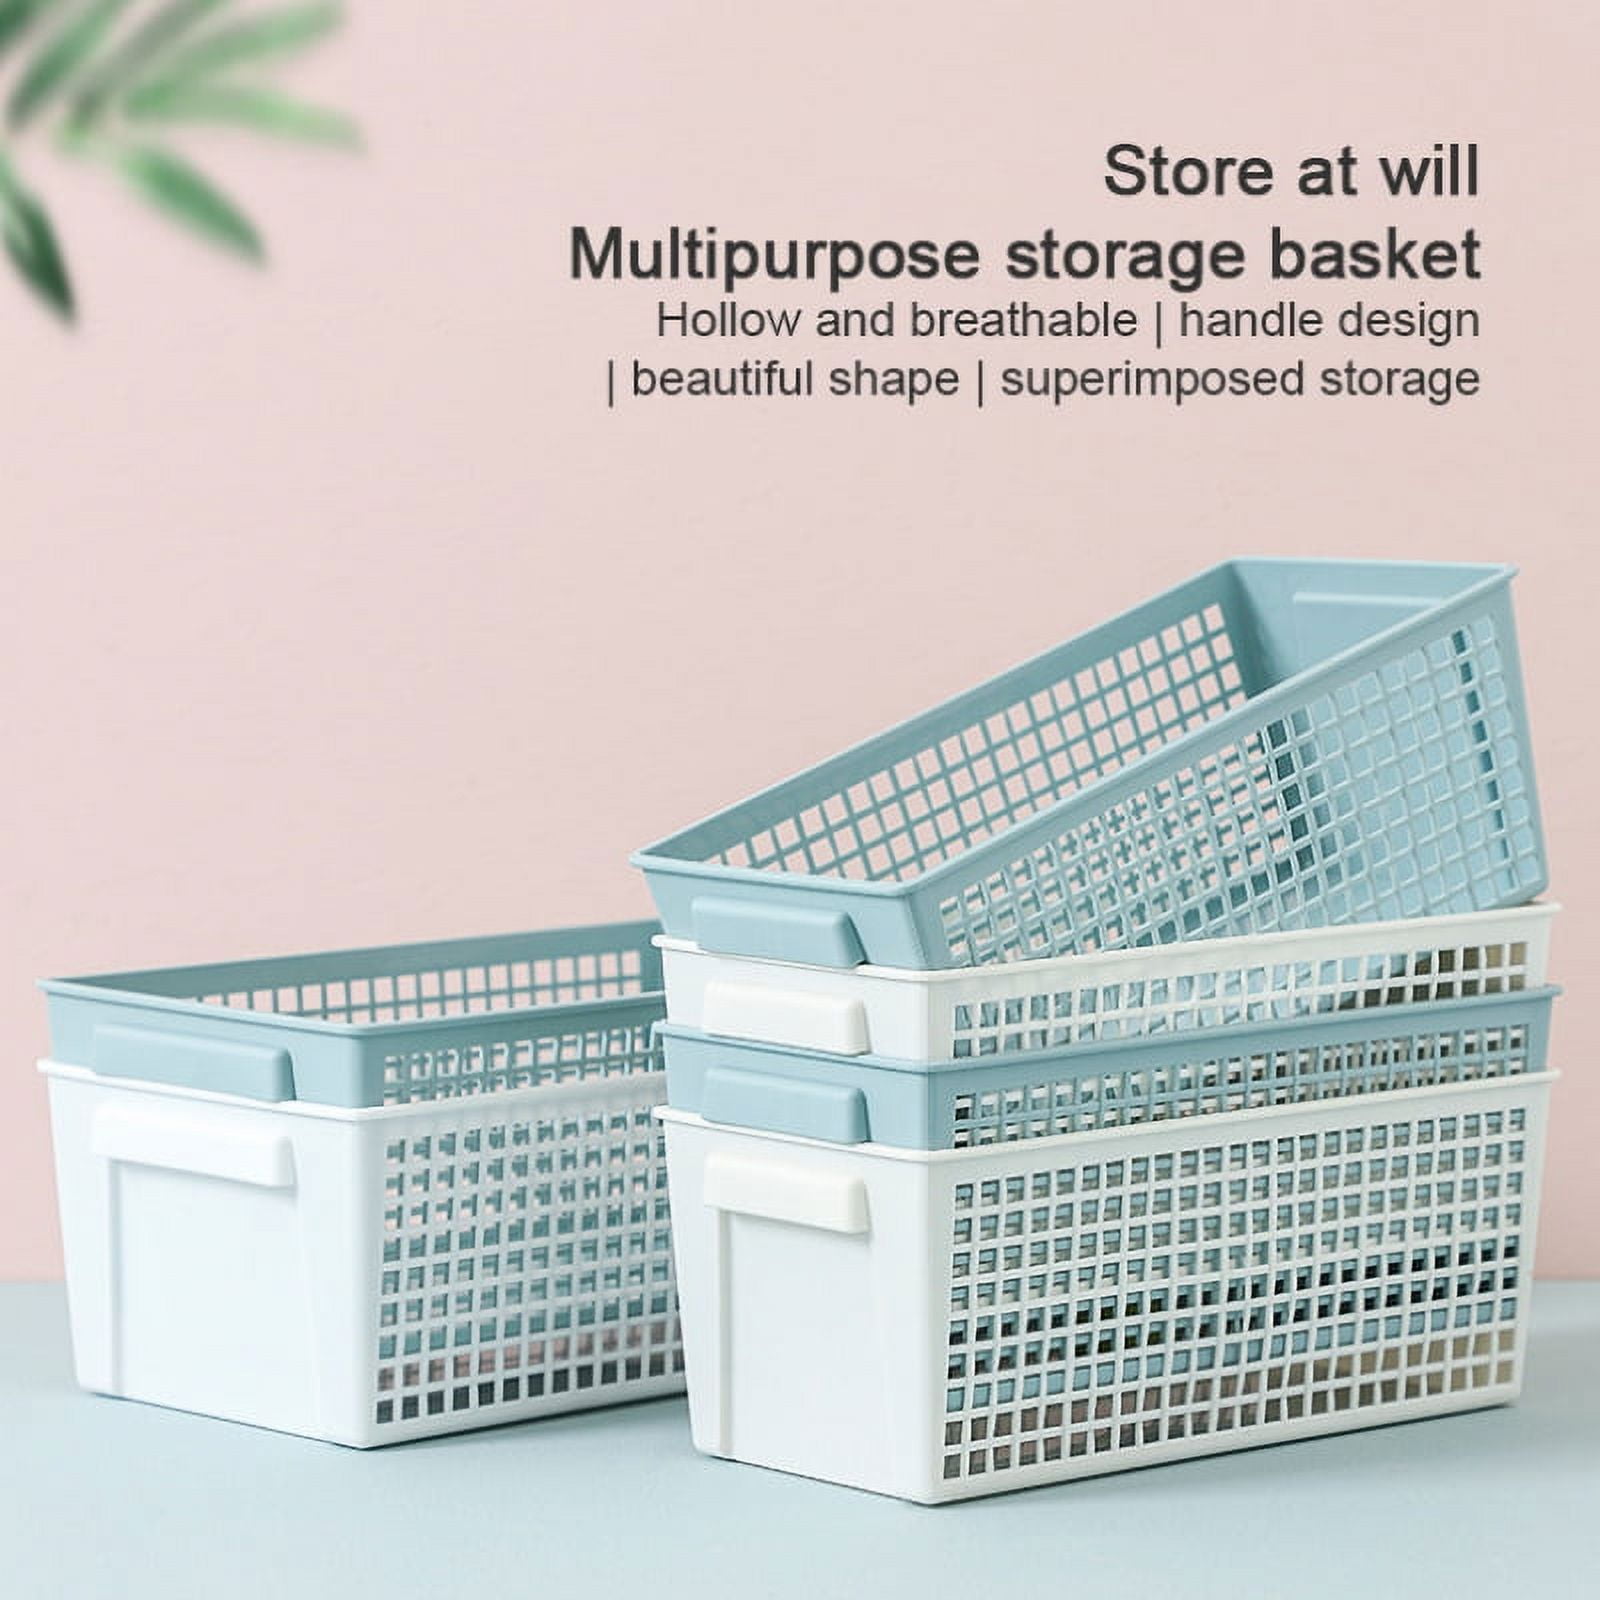 OLLIC Plastic Bins Large Storage with Lids | Korean Organizer Bin Basket  Set for Organizing Baskets in Closet and Home (White, Large 4PK)